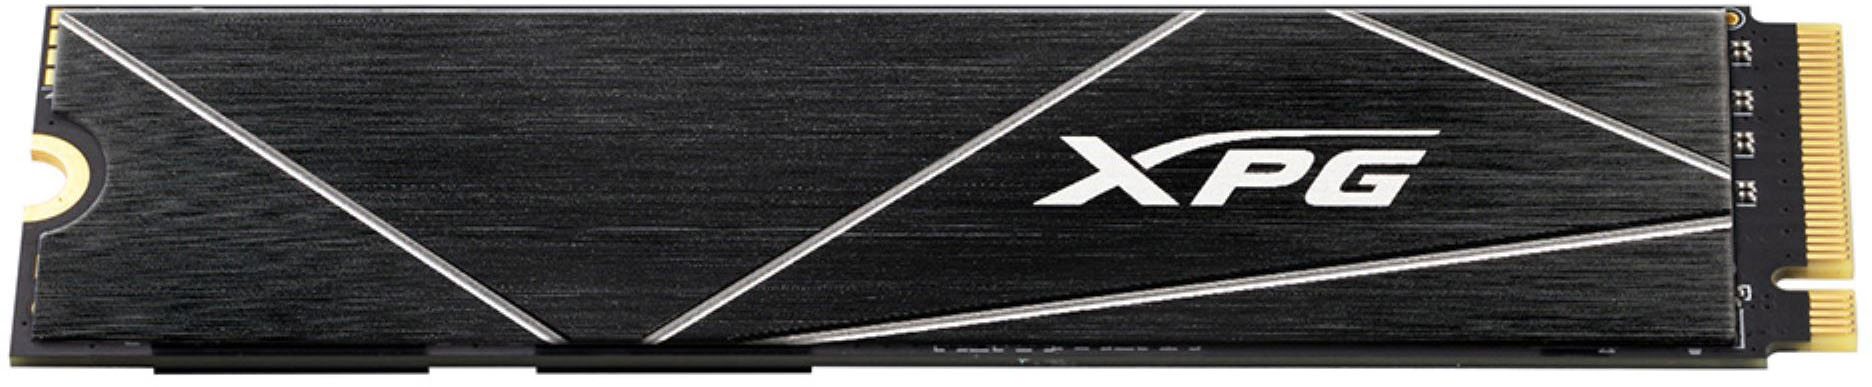 Adata XPG S70 Blade 1TB $99.99